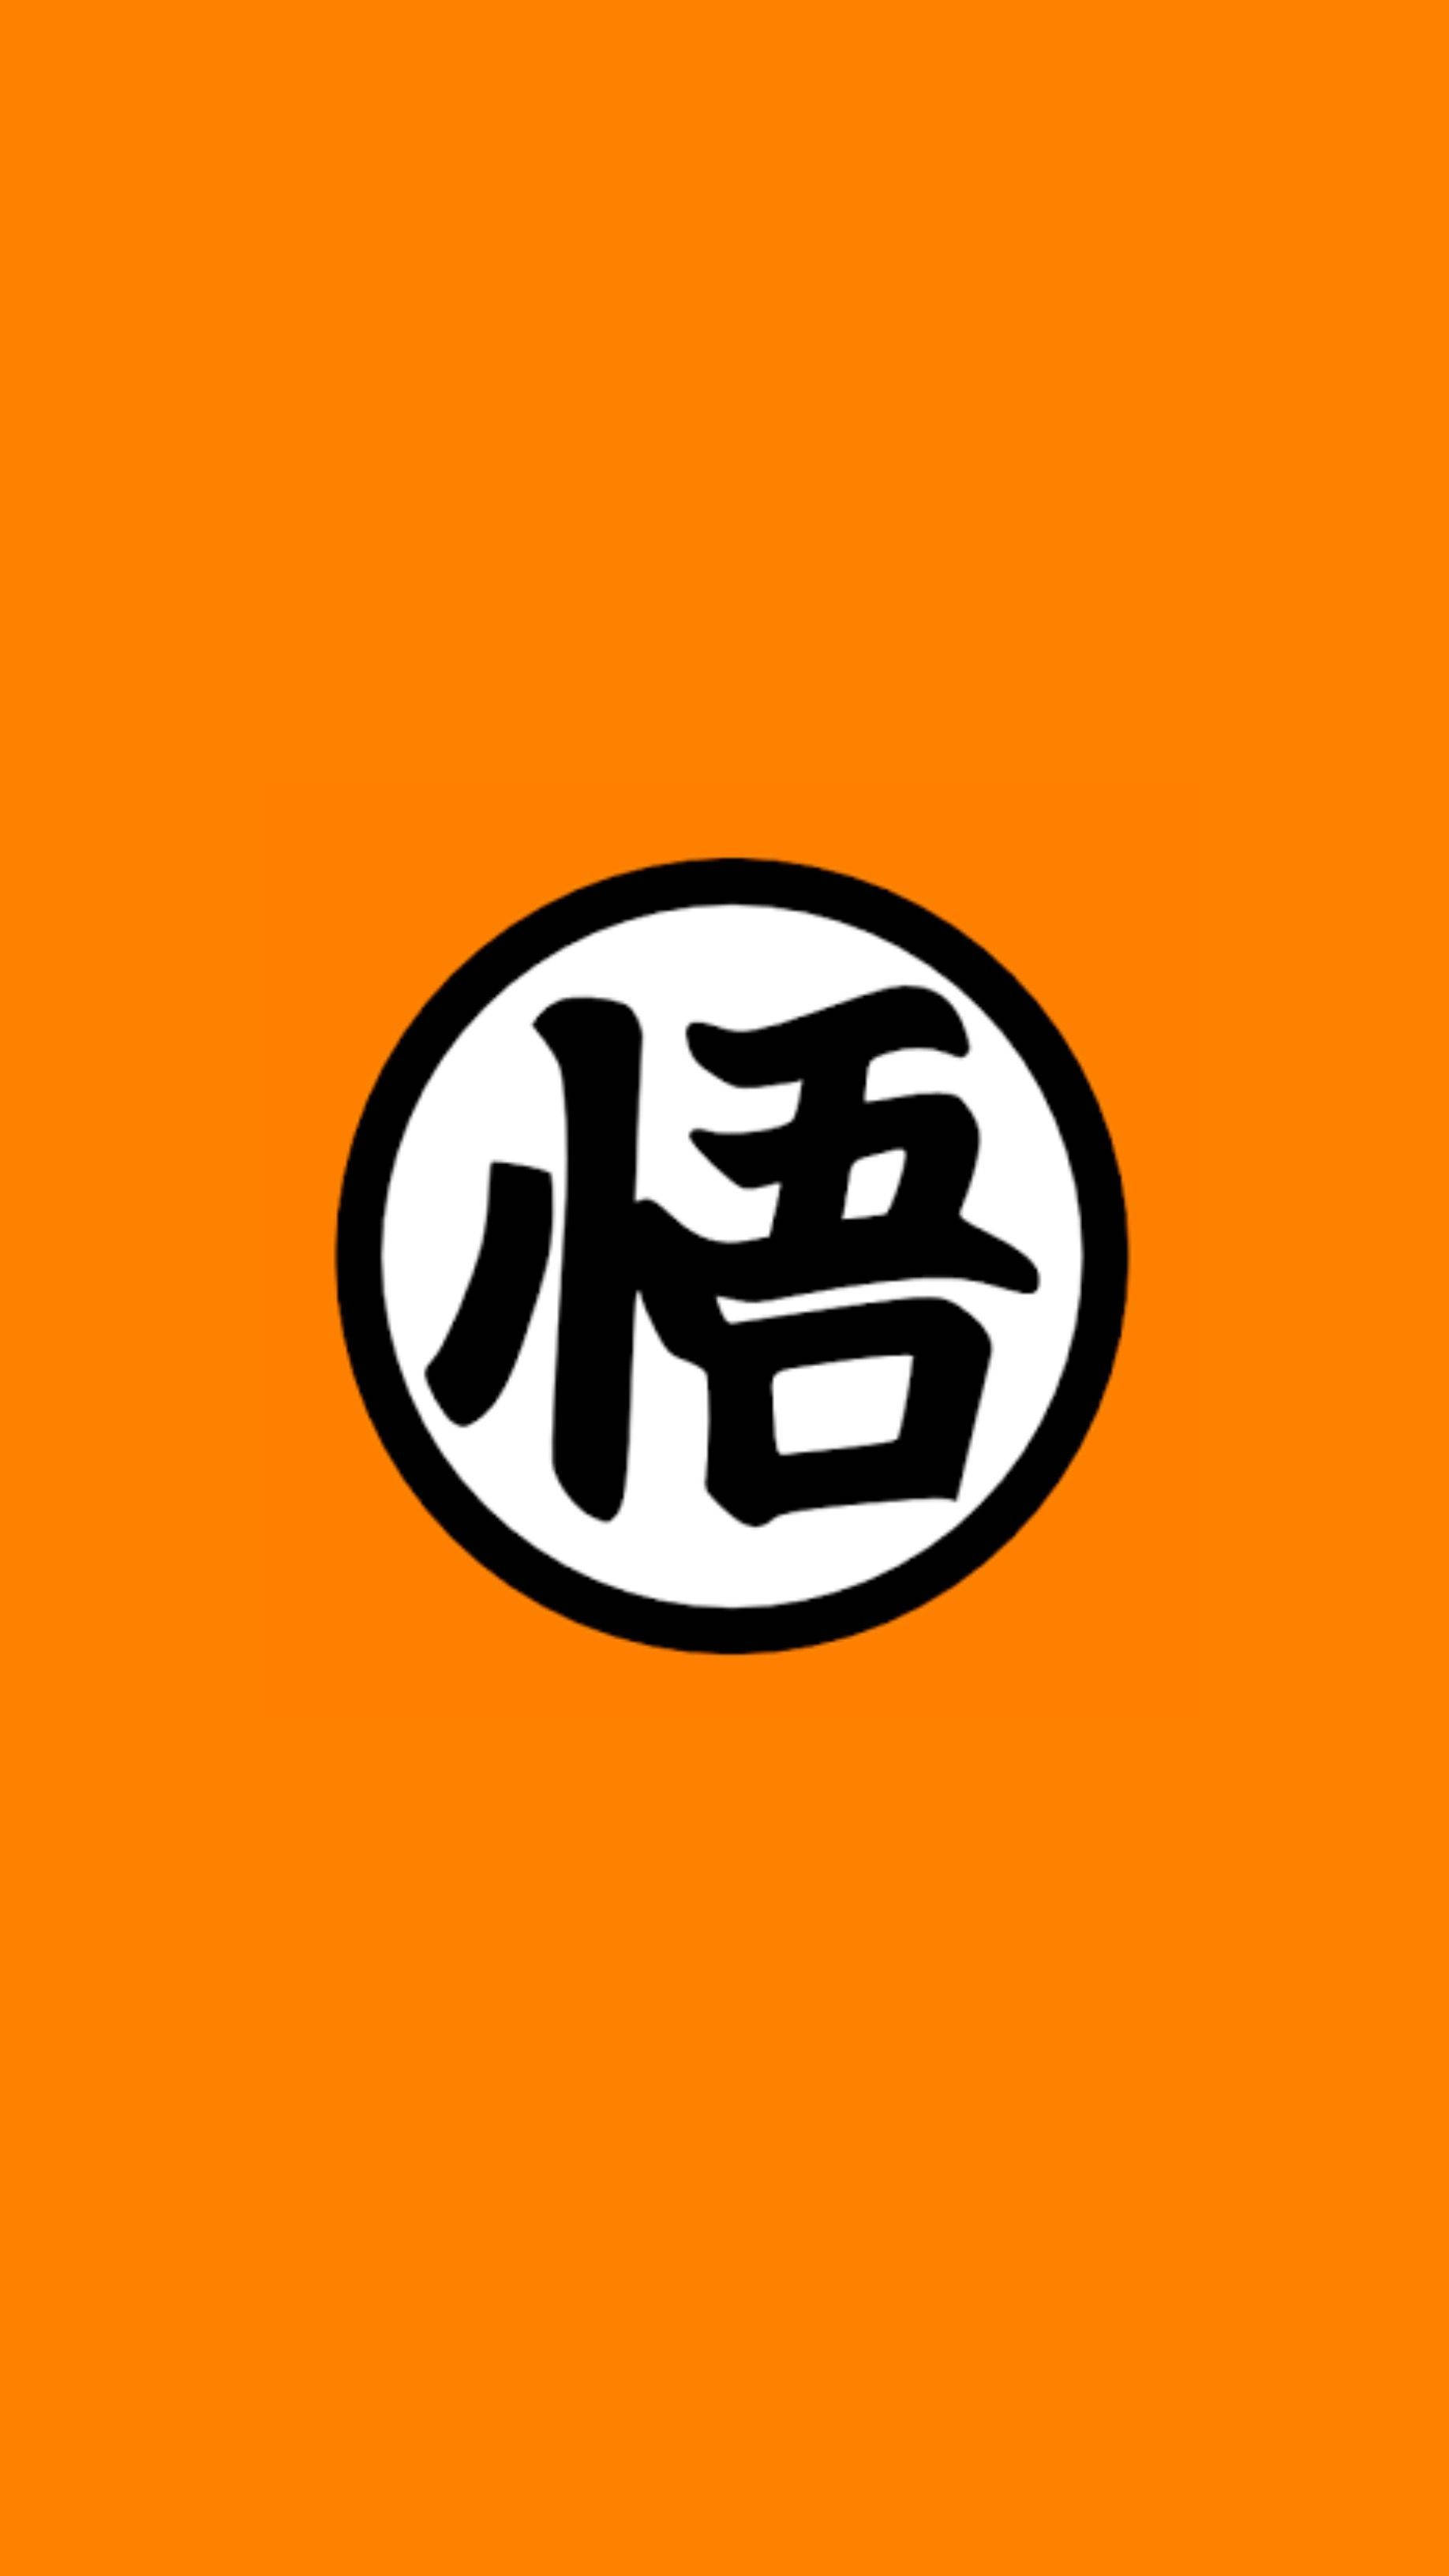 Dbz Logo On Orange Background Wallpaper